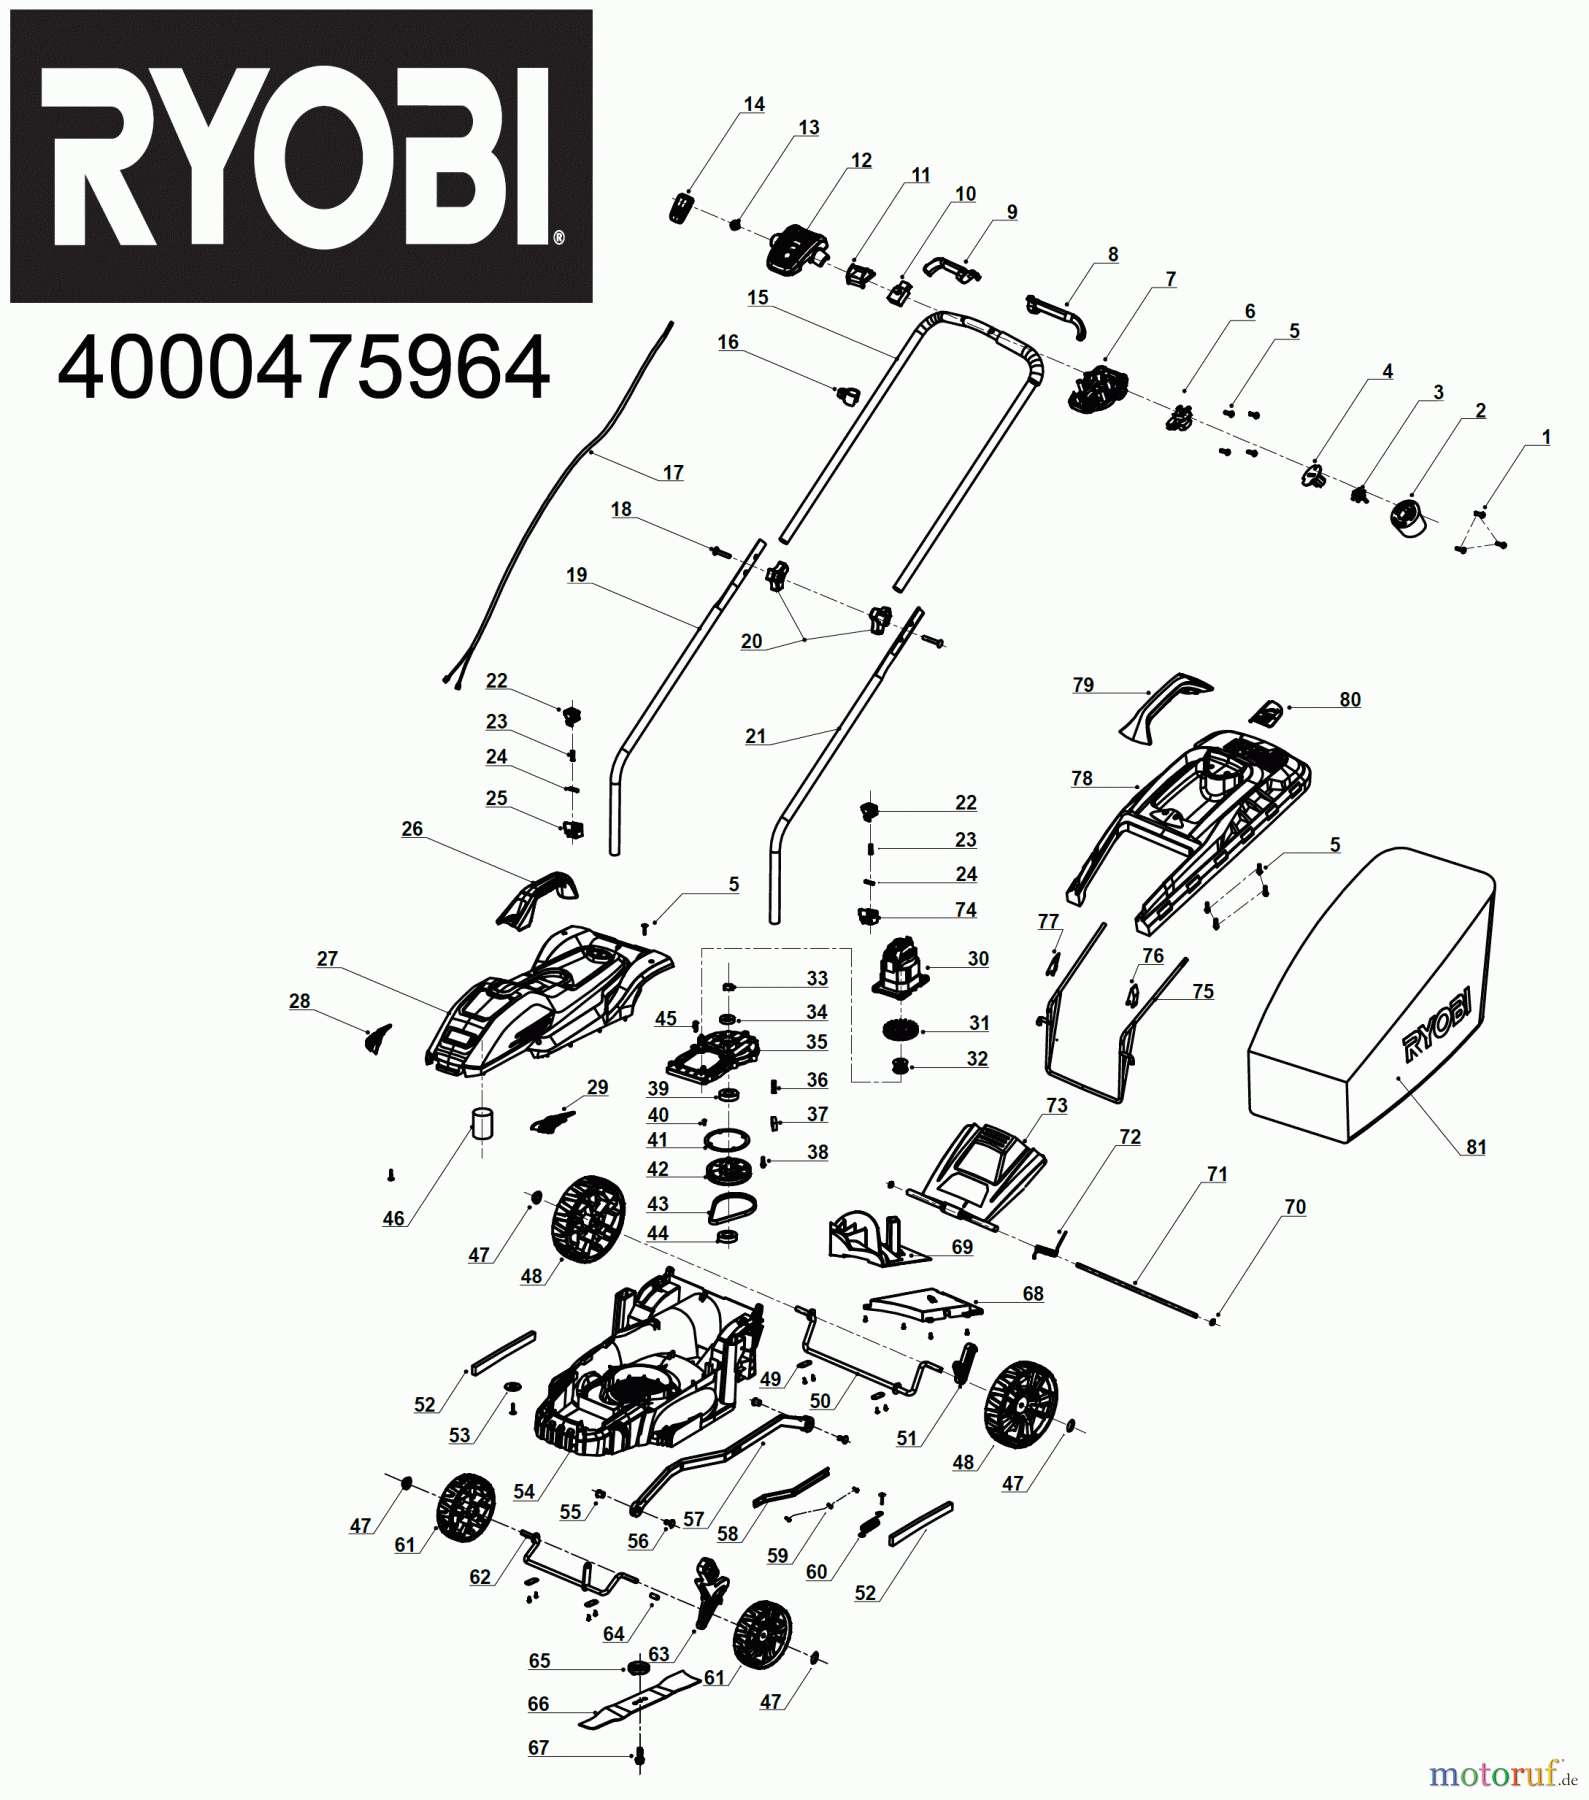  Ryobi Rasenmäher Elektro RLM3313A 1.300 W Elektro-Rasenmäher, Schnittbreite 33 cm Seite 1